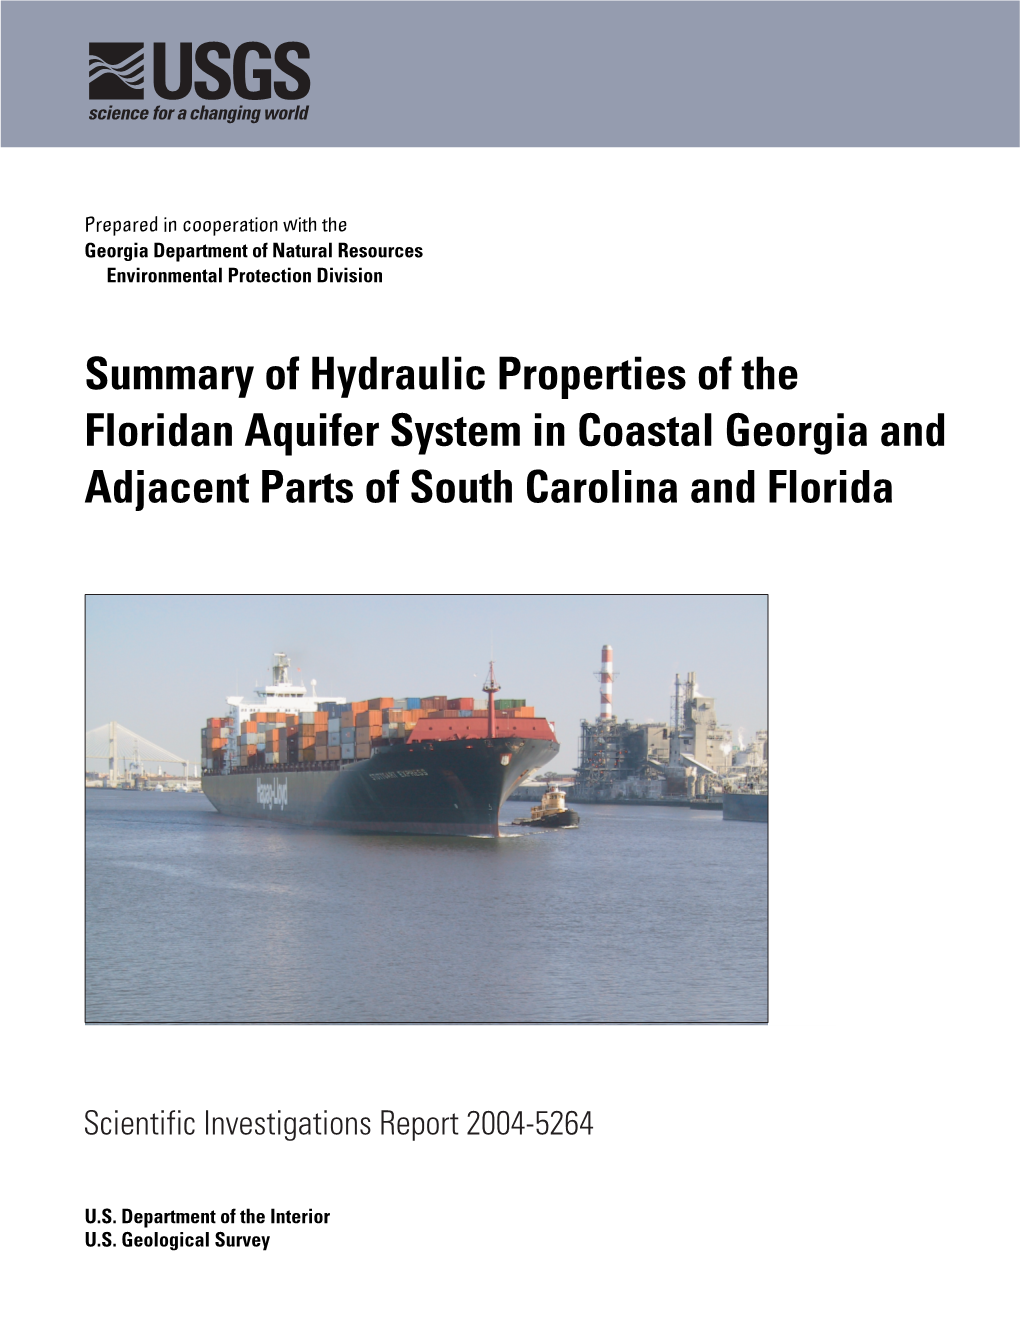 1. Vertical Hydraulic Conductivity of the Floridan Aquifer System, Coastal Georgia and Adjacent Parts of South Carolina and Florida